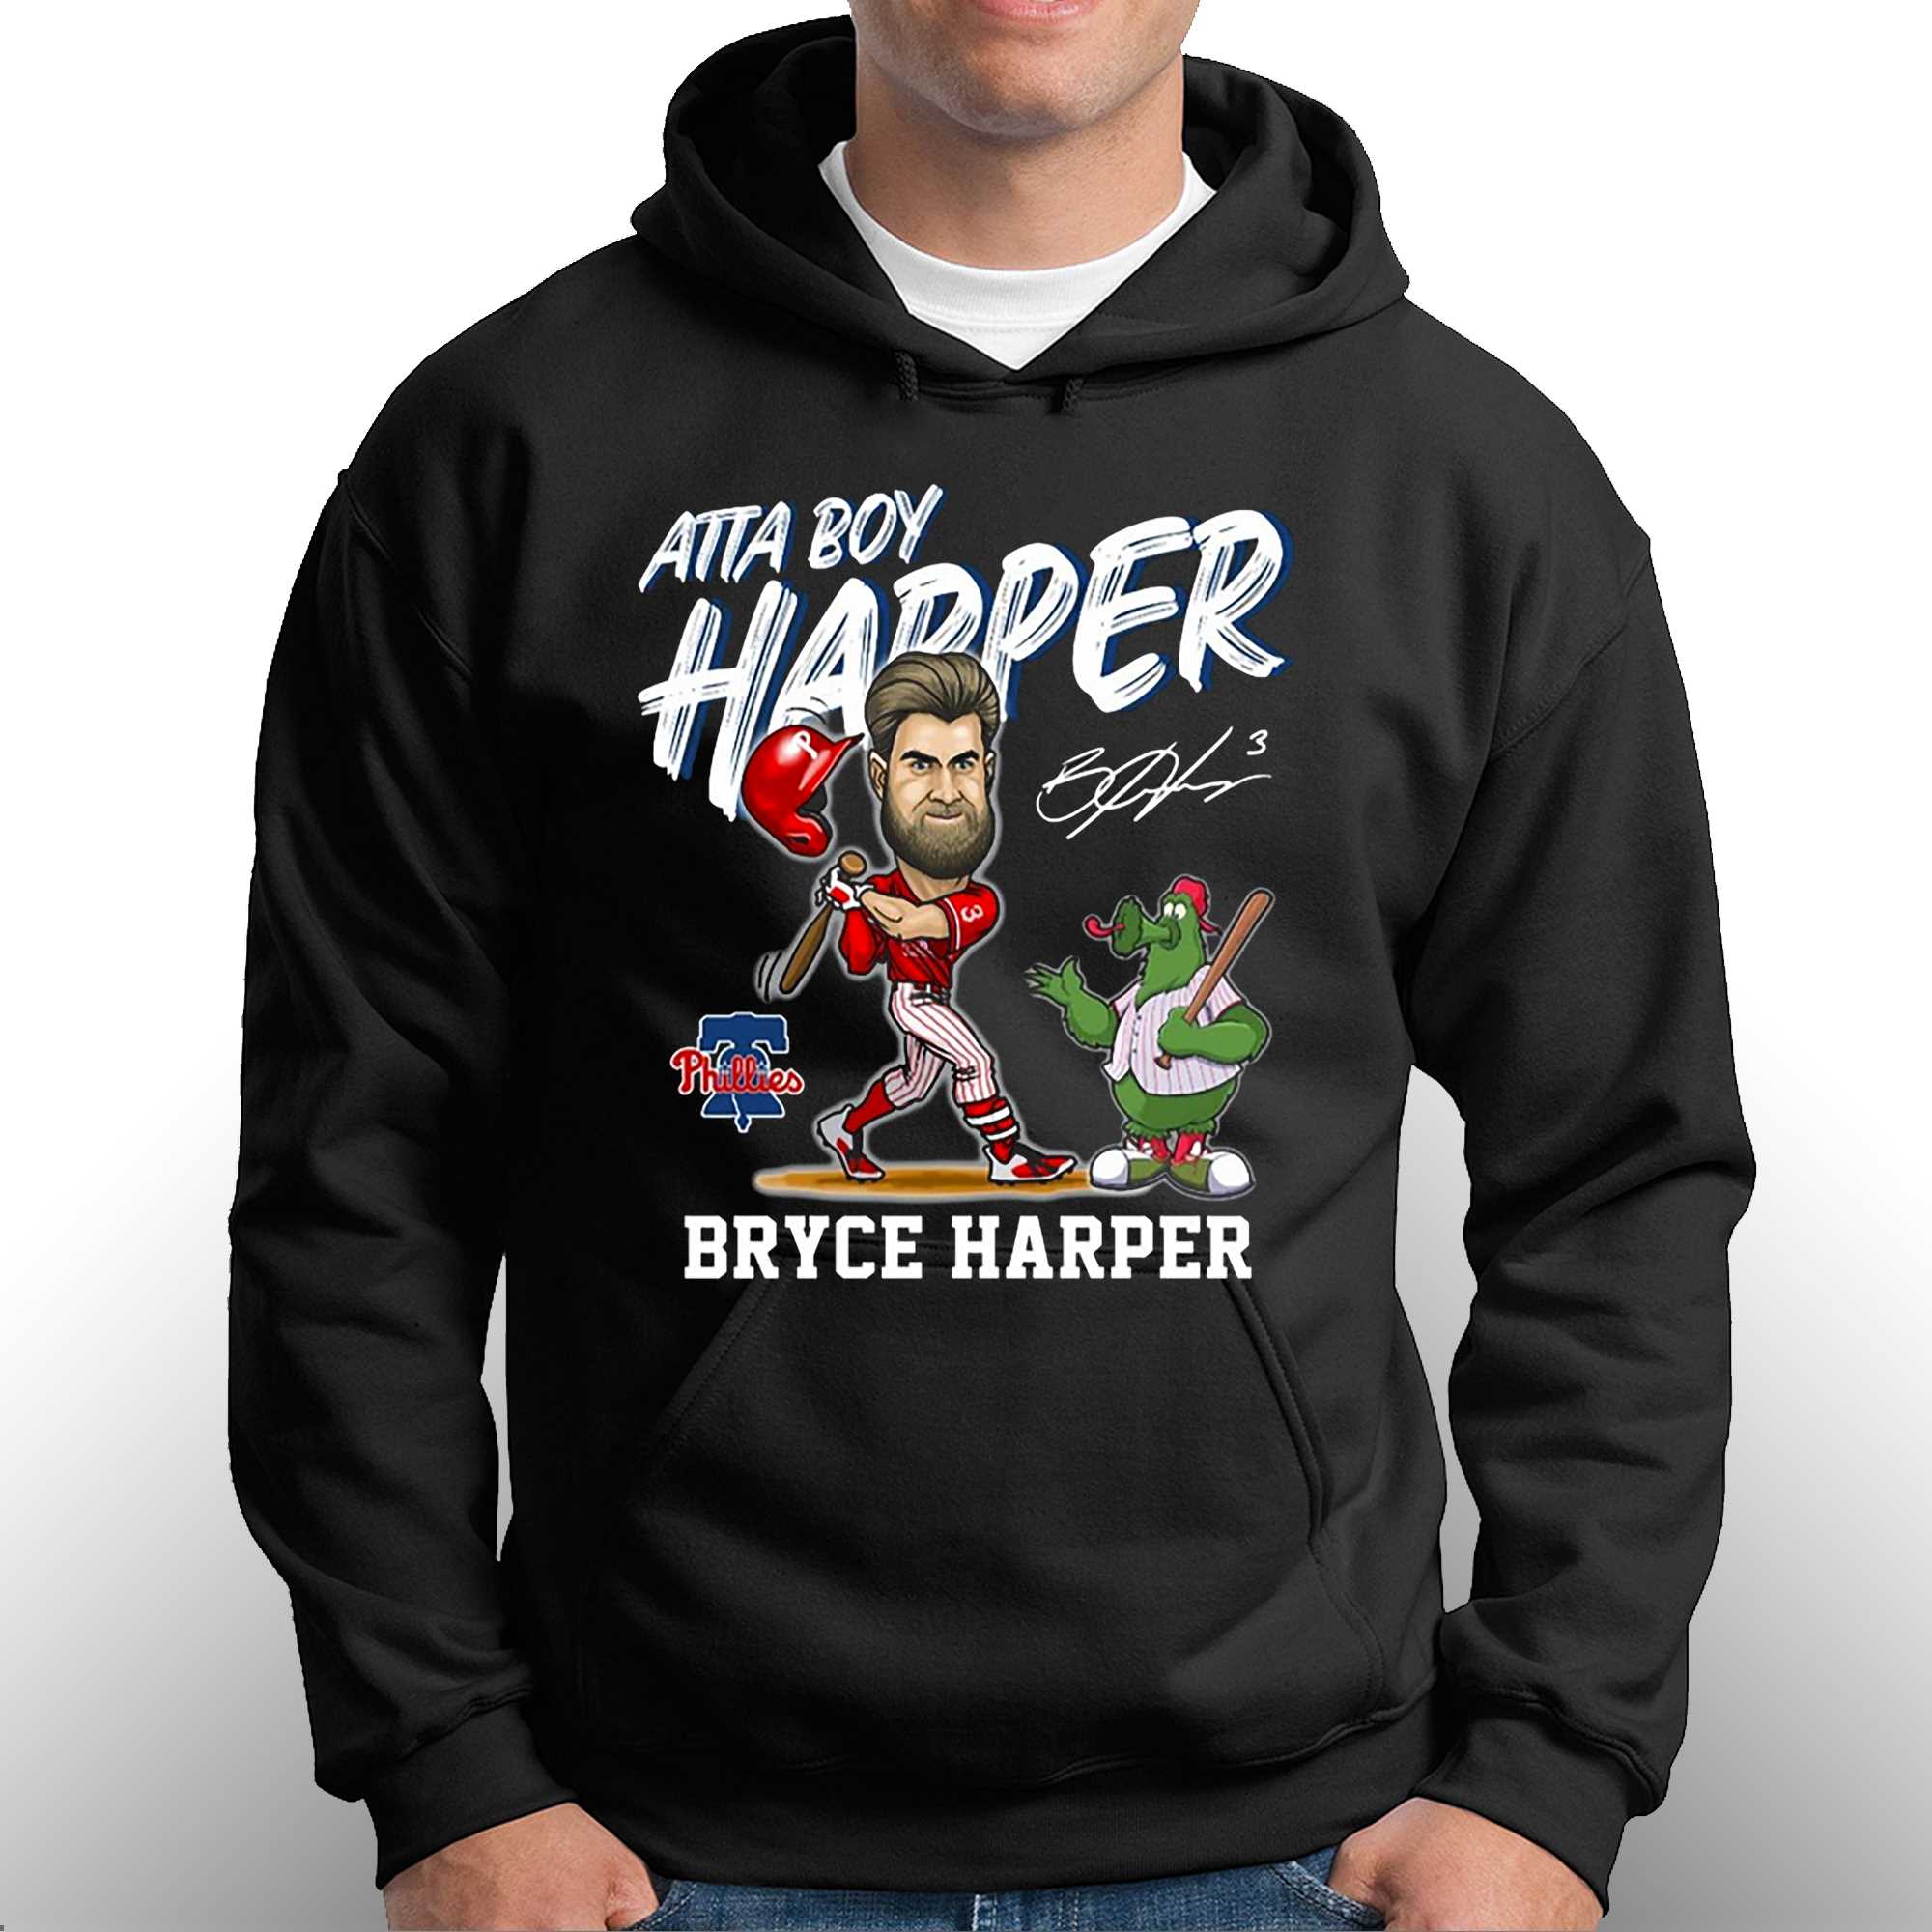 Bryce Harper Philadelphia Phillies Atta Boy photo shirt, hoodie